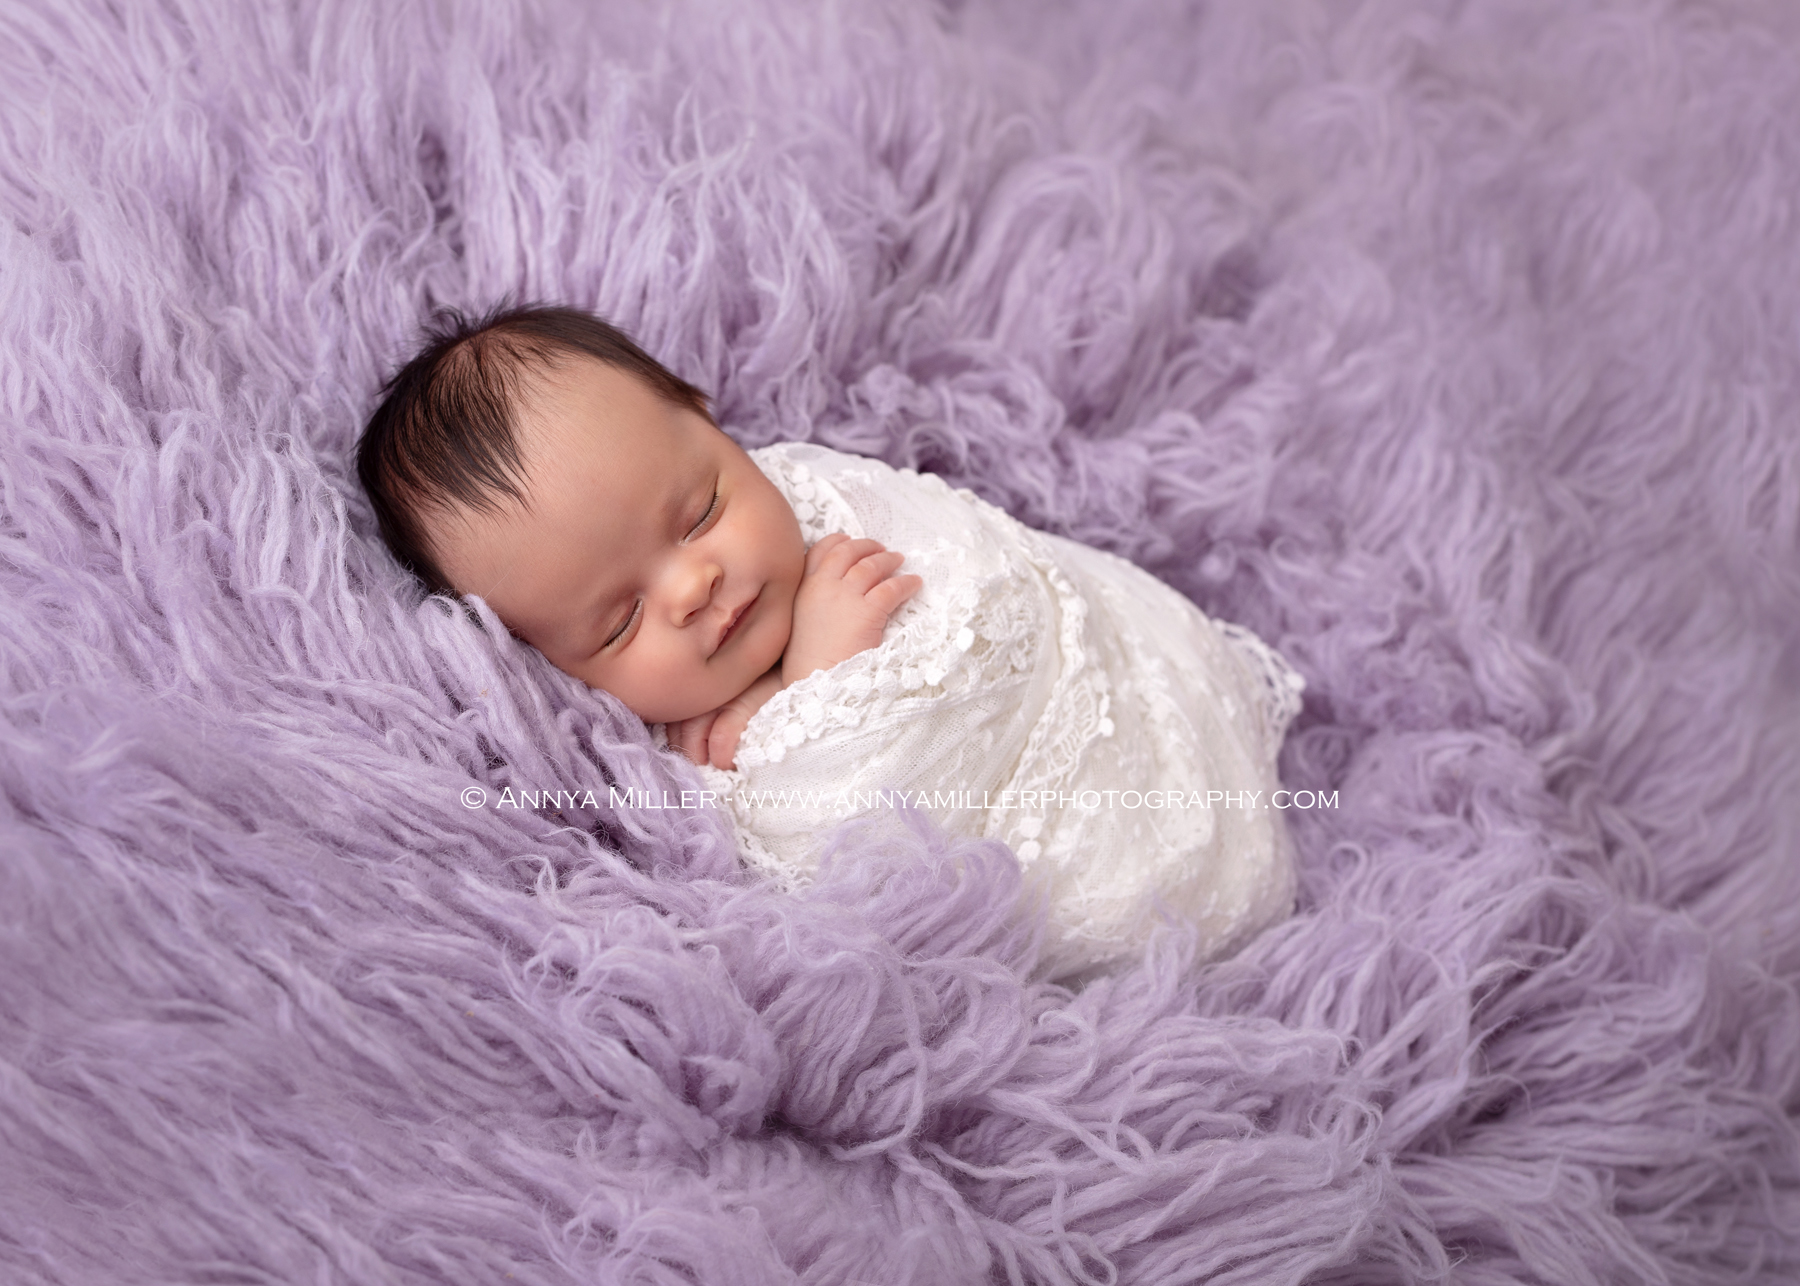 Toronto infant photos of newborn girl by Pickering photographer Annya Miller 